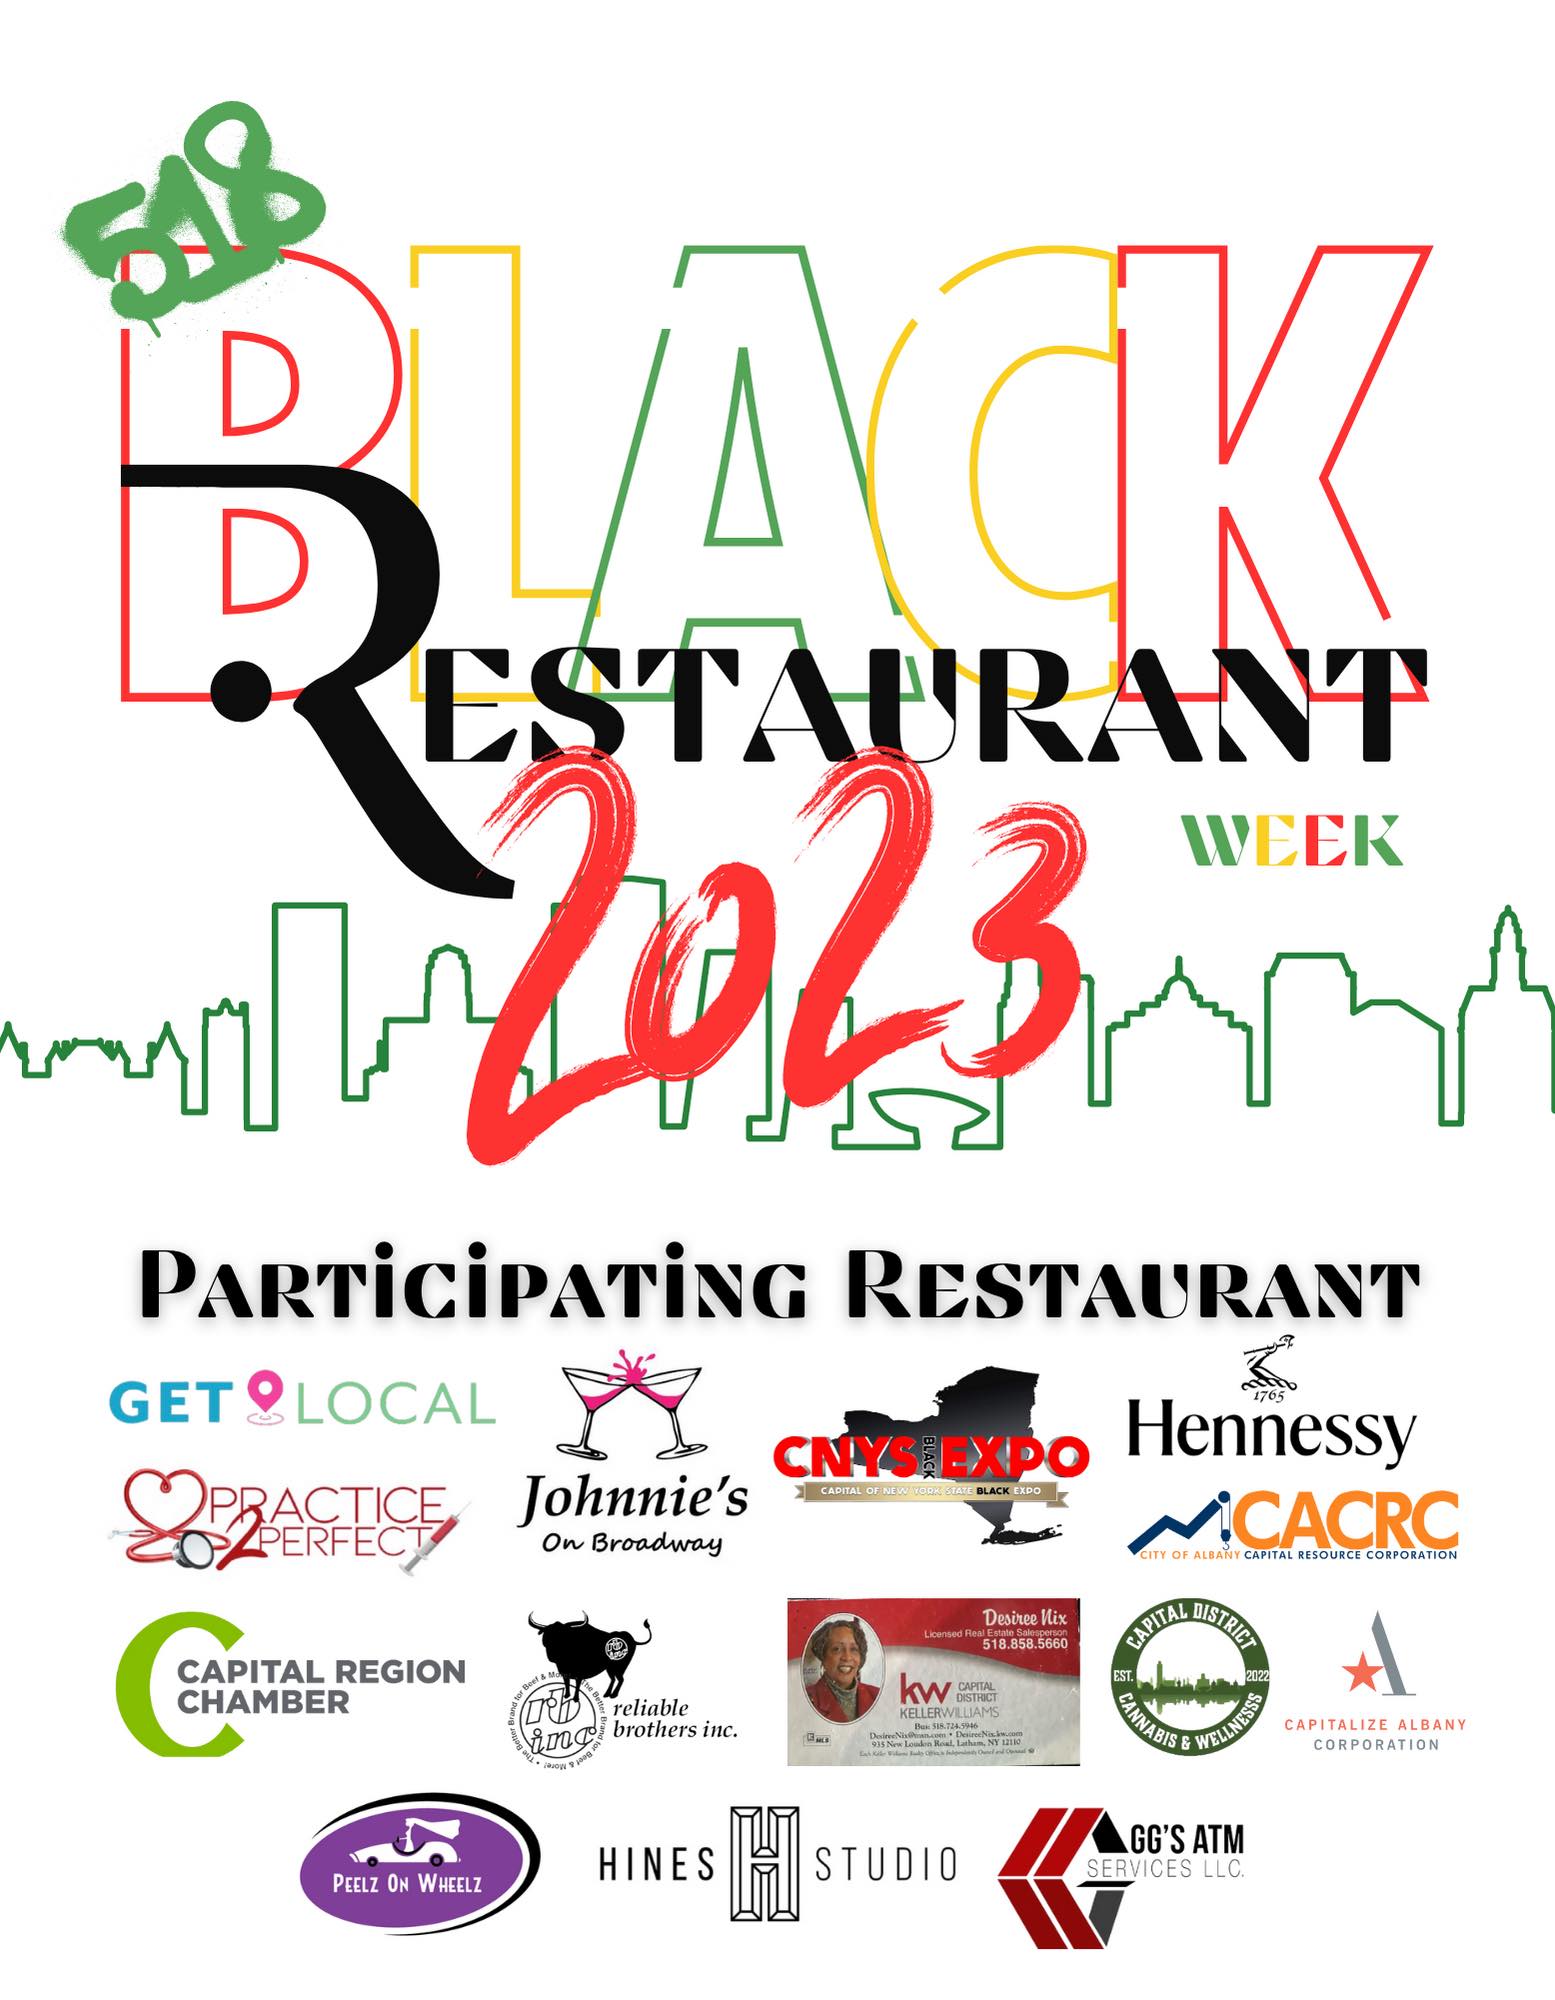 518 Black Restaurant Week in Albany The Week of Capitalize